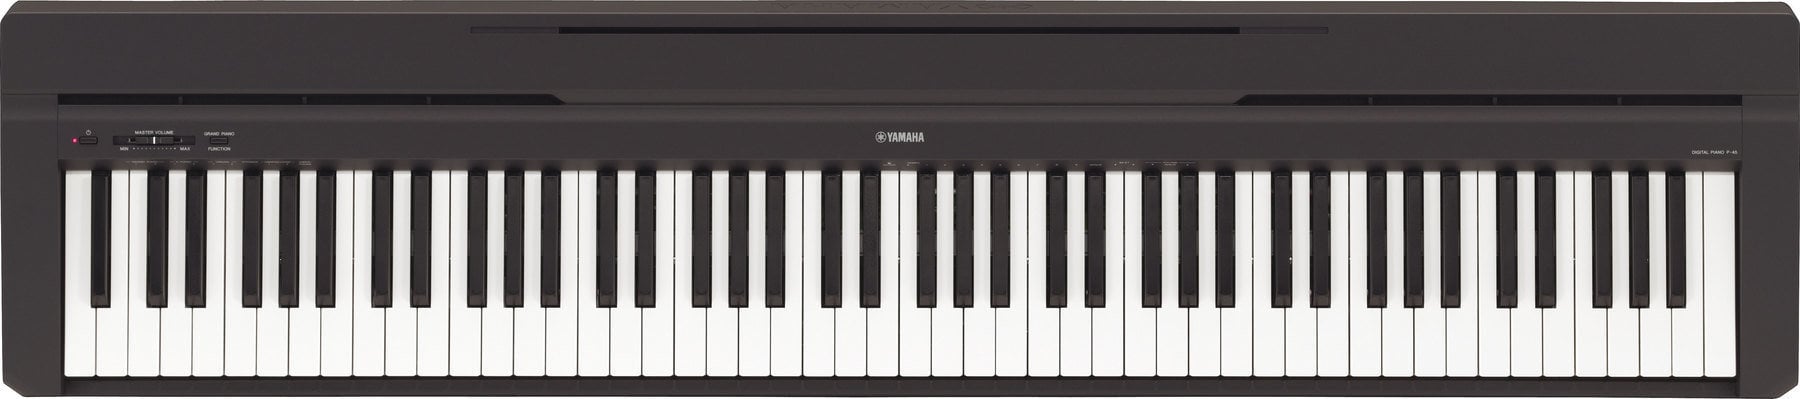 Digitaal stagepiano Yamaha P-45 B Digitaal stagepiano